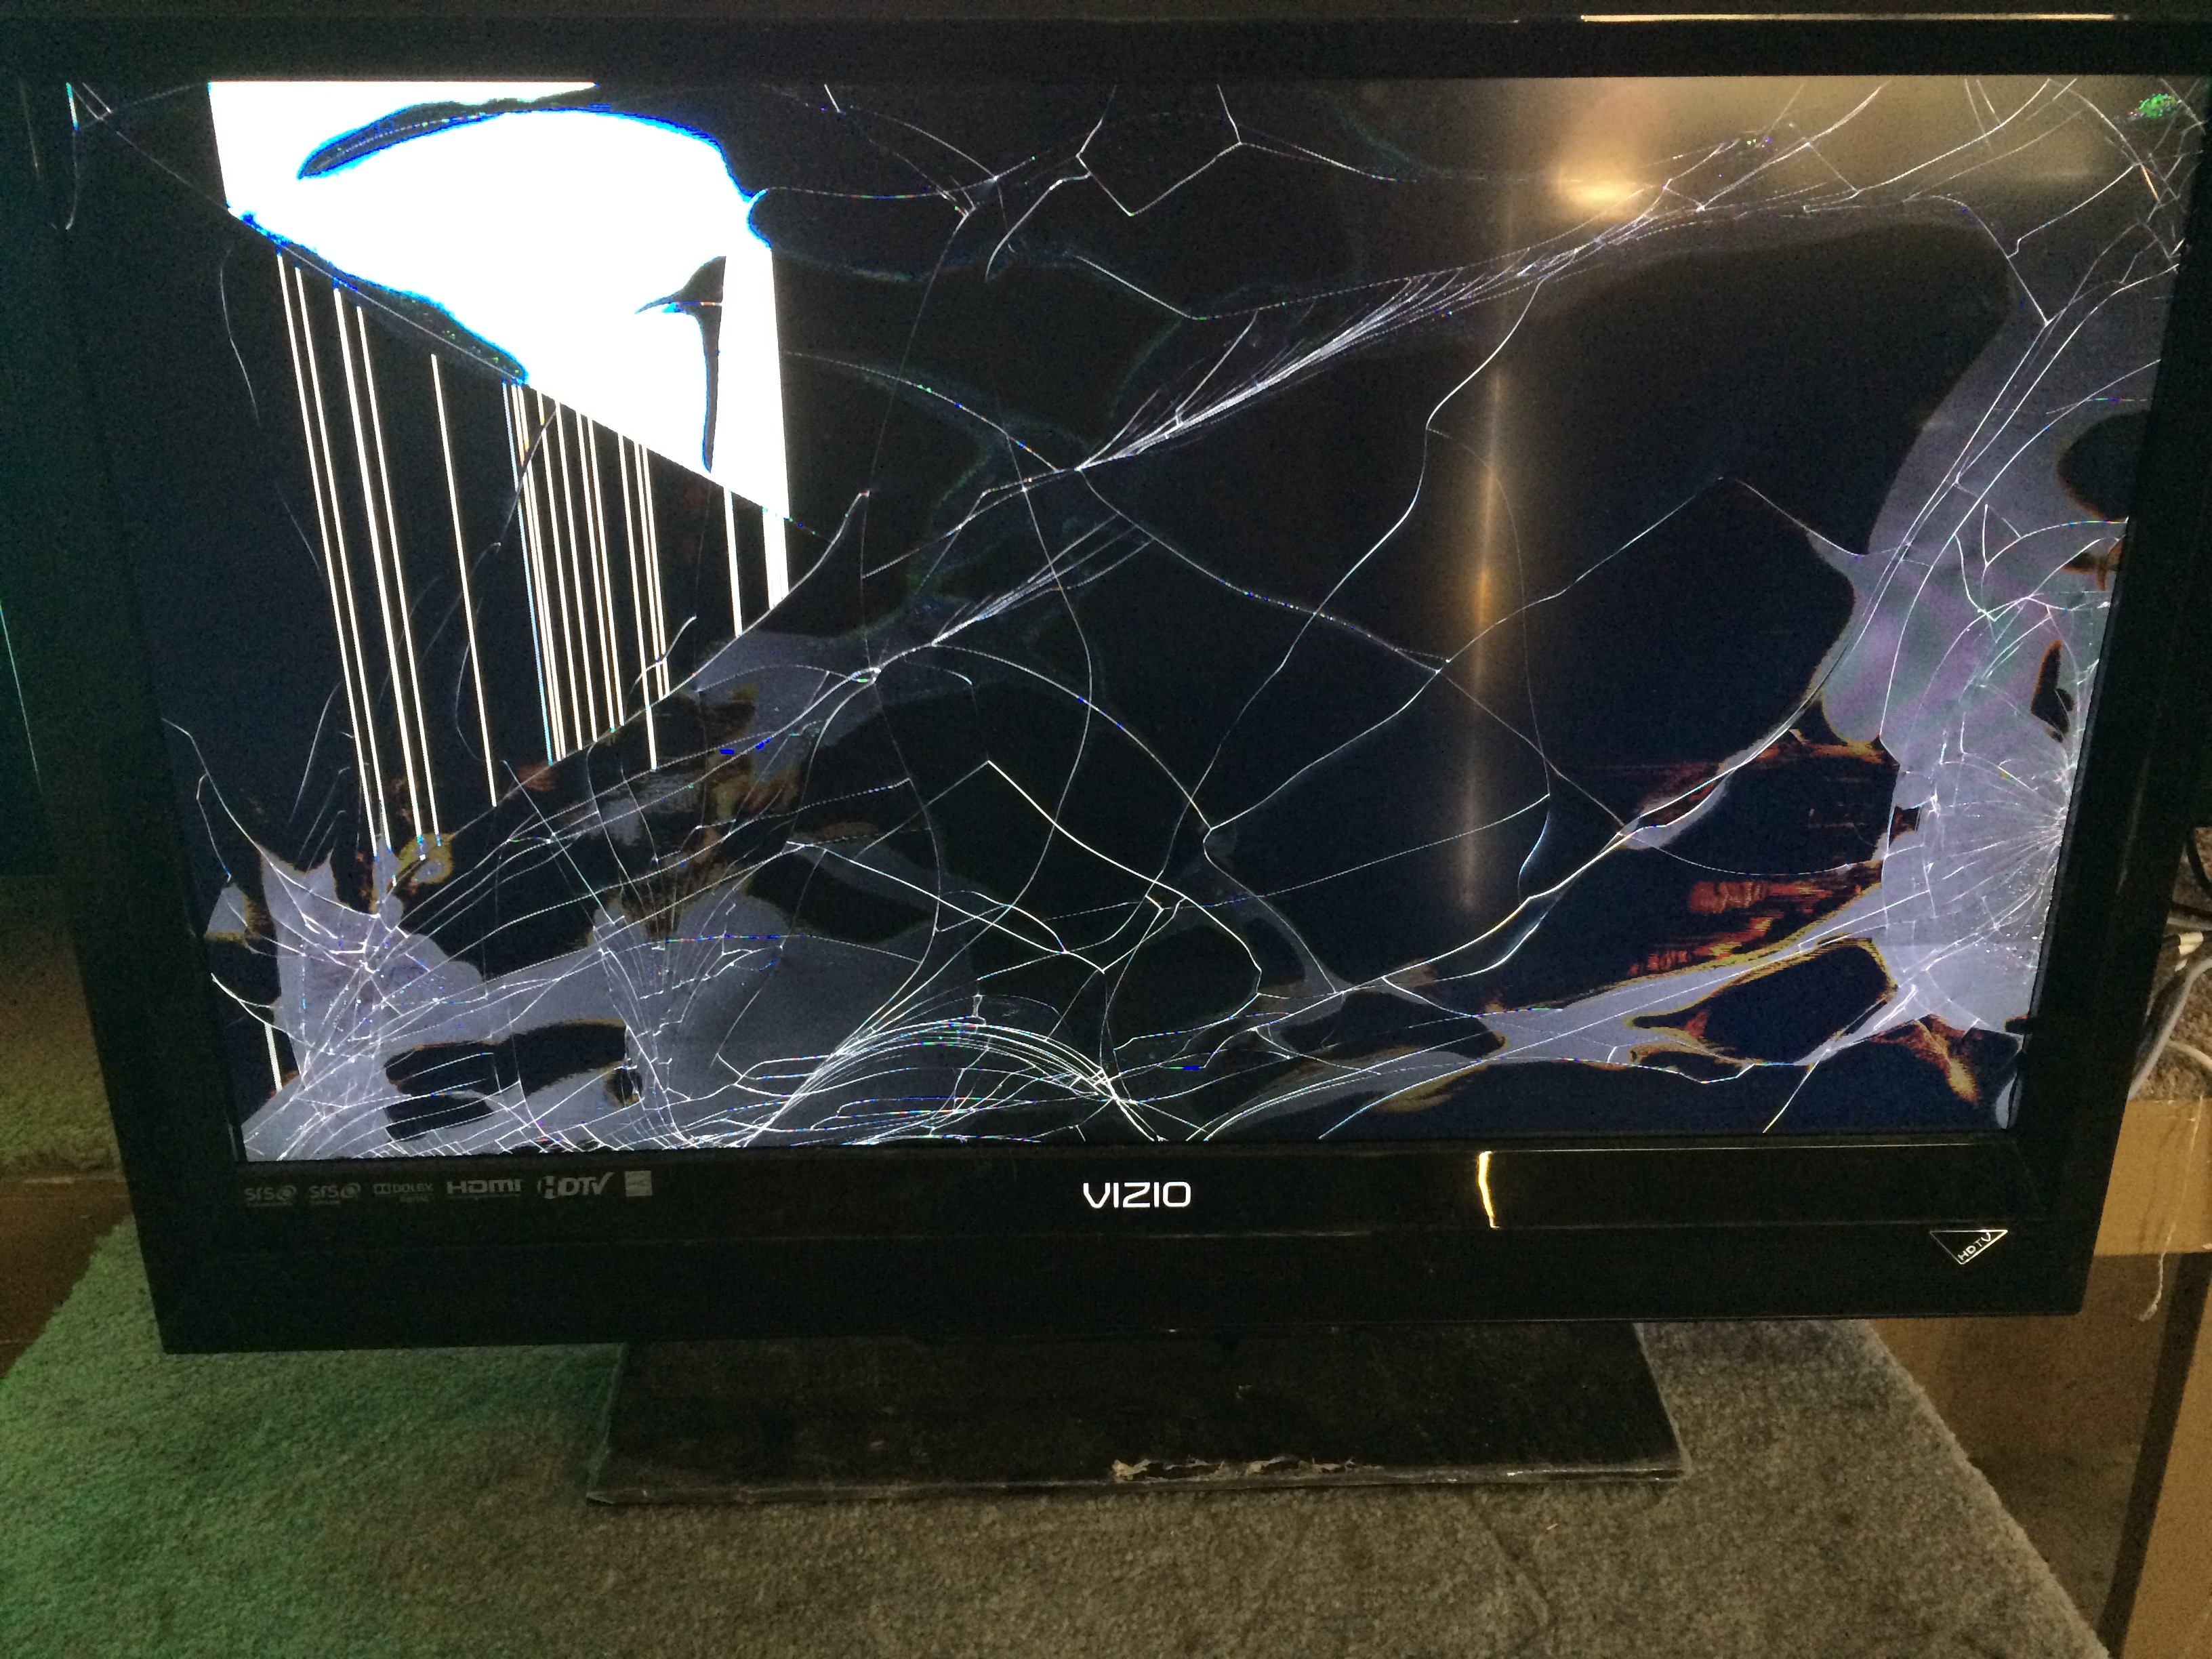 Broken Screen On Vizio Lcd Tv - Broken Tv Screen - HD Wallpaper 